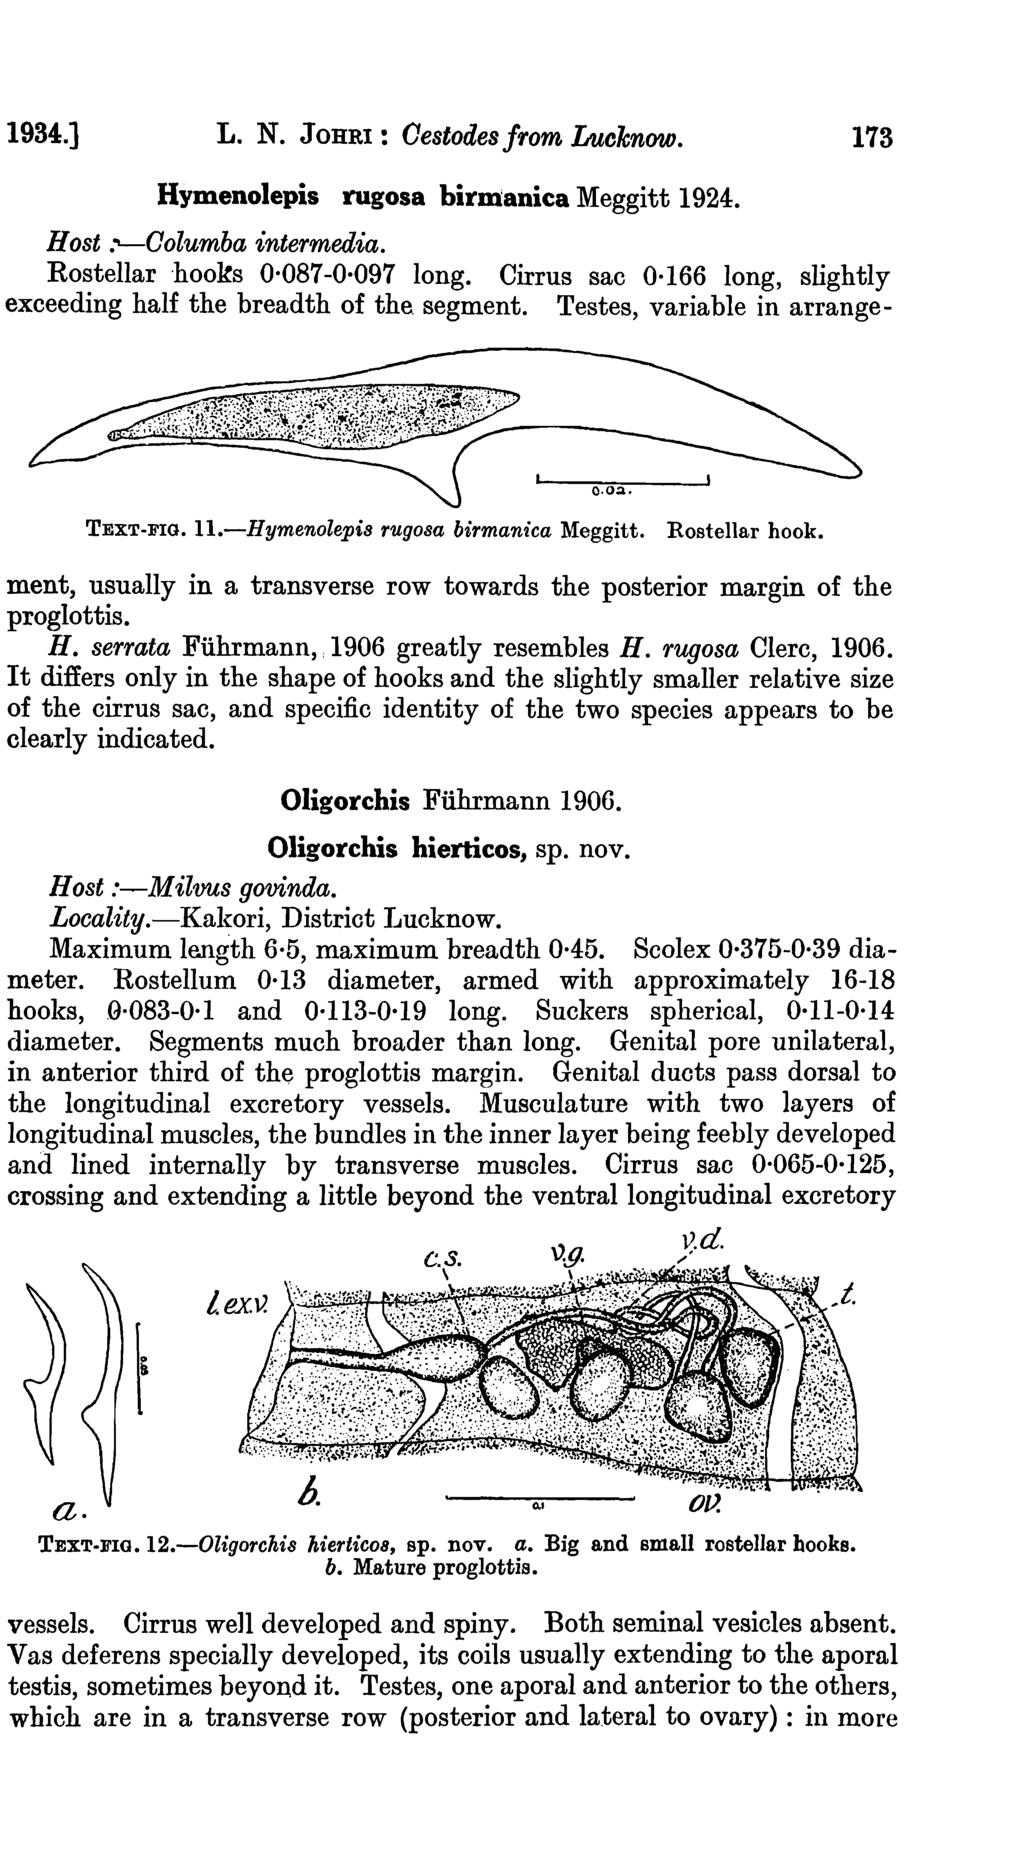 1934.] L. N. JOHRI: Oestodes from Lucknow. 173 Hymenolepis rugosa birmanica Meggitt 1924. Host :'-Oolumba intermedia. Rostellar 'hooks 0 087-0 097 long.